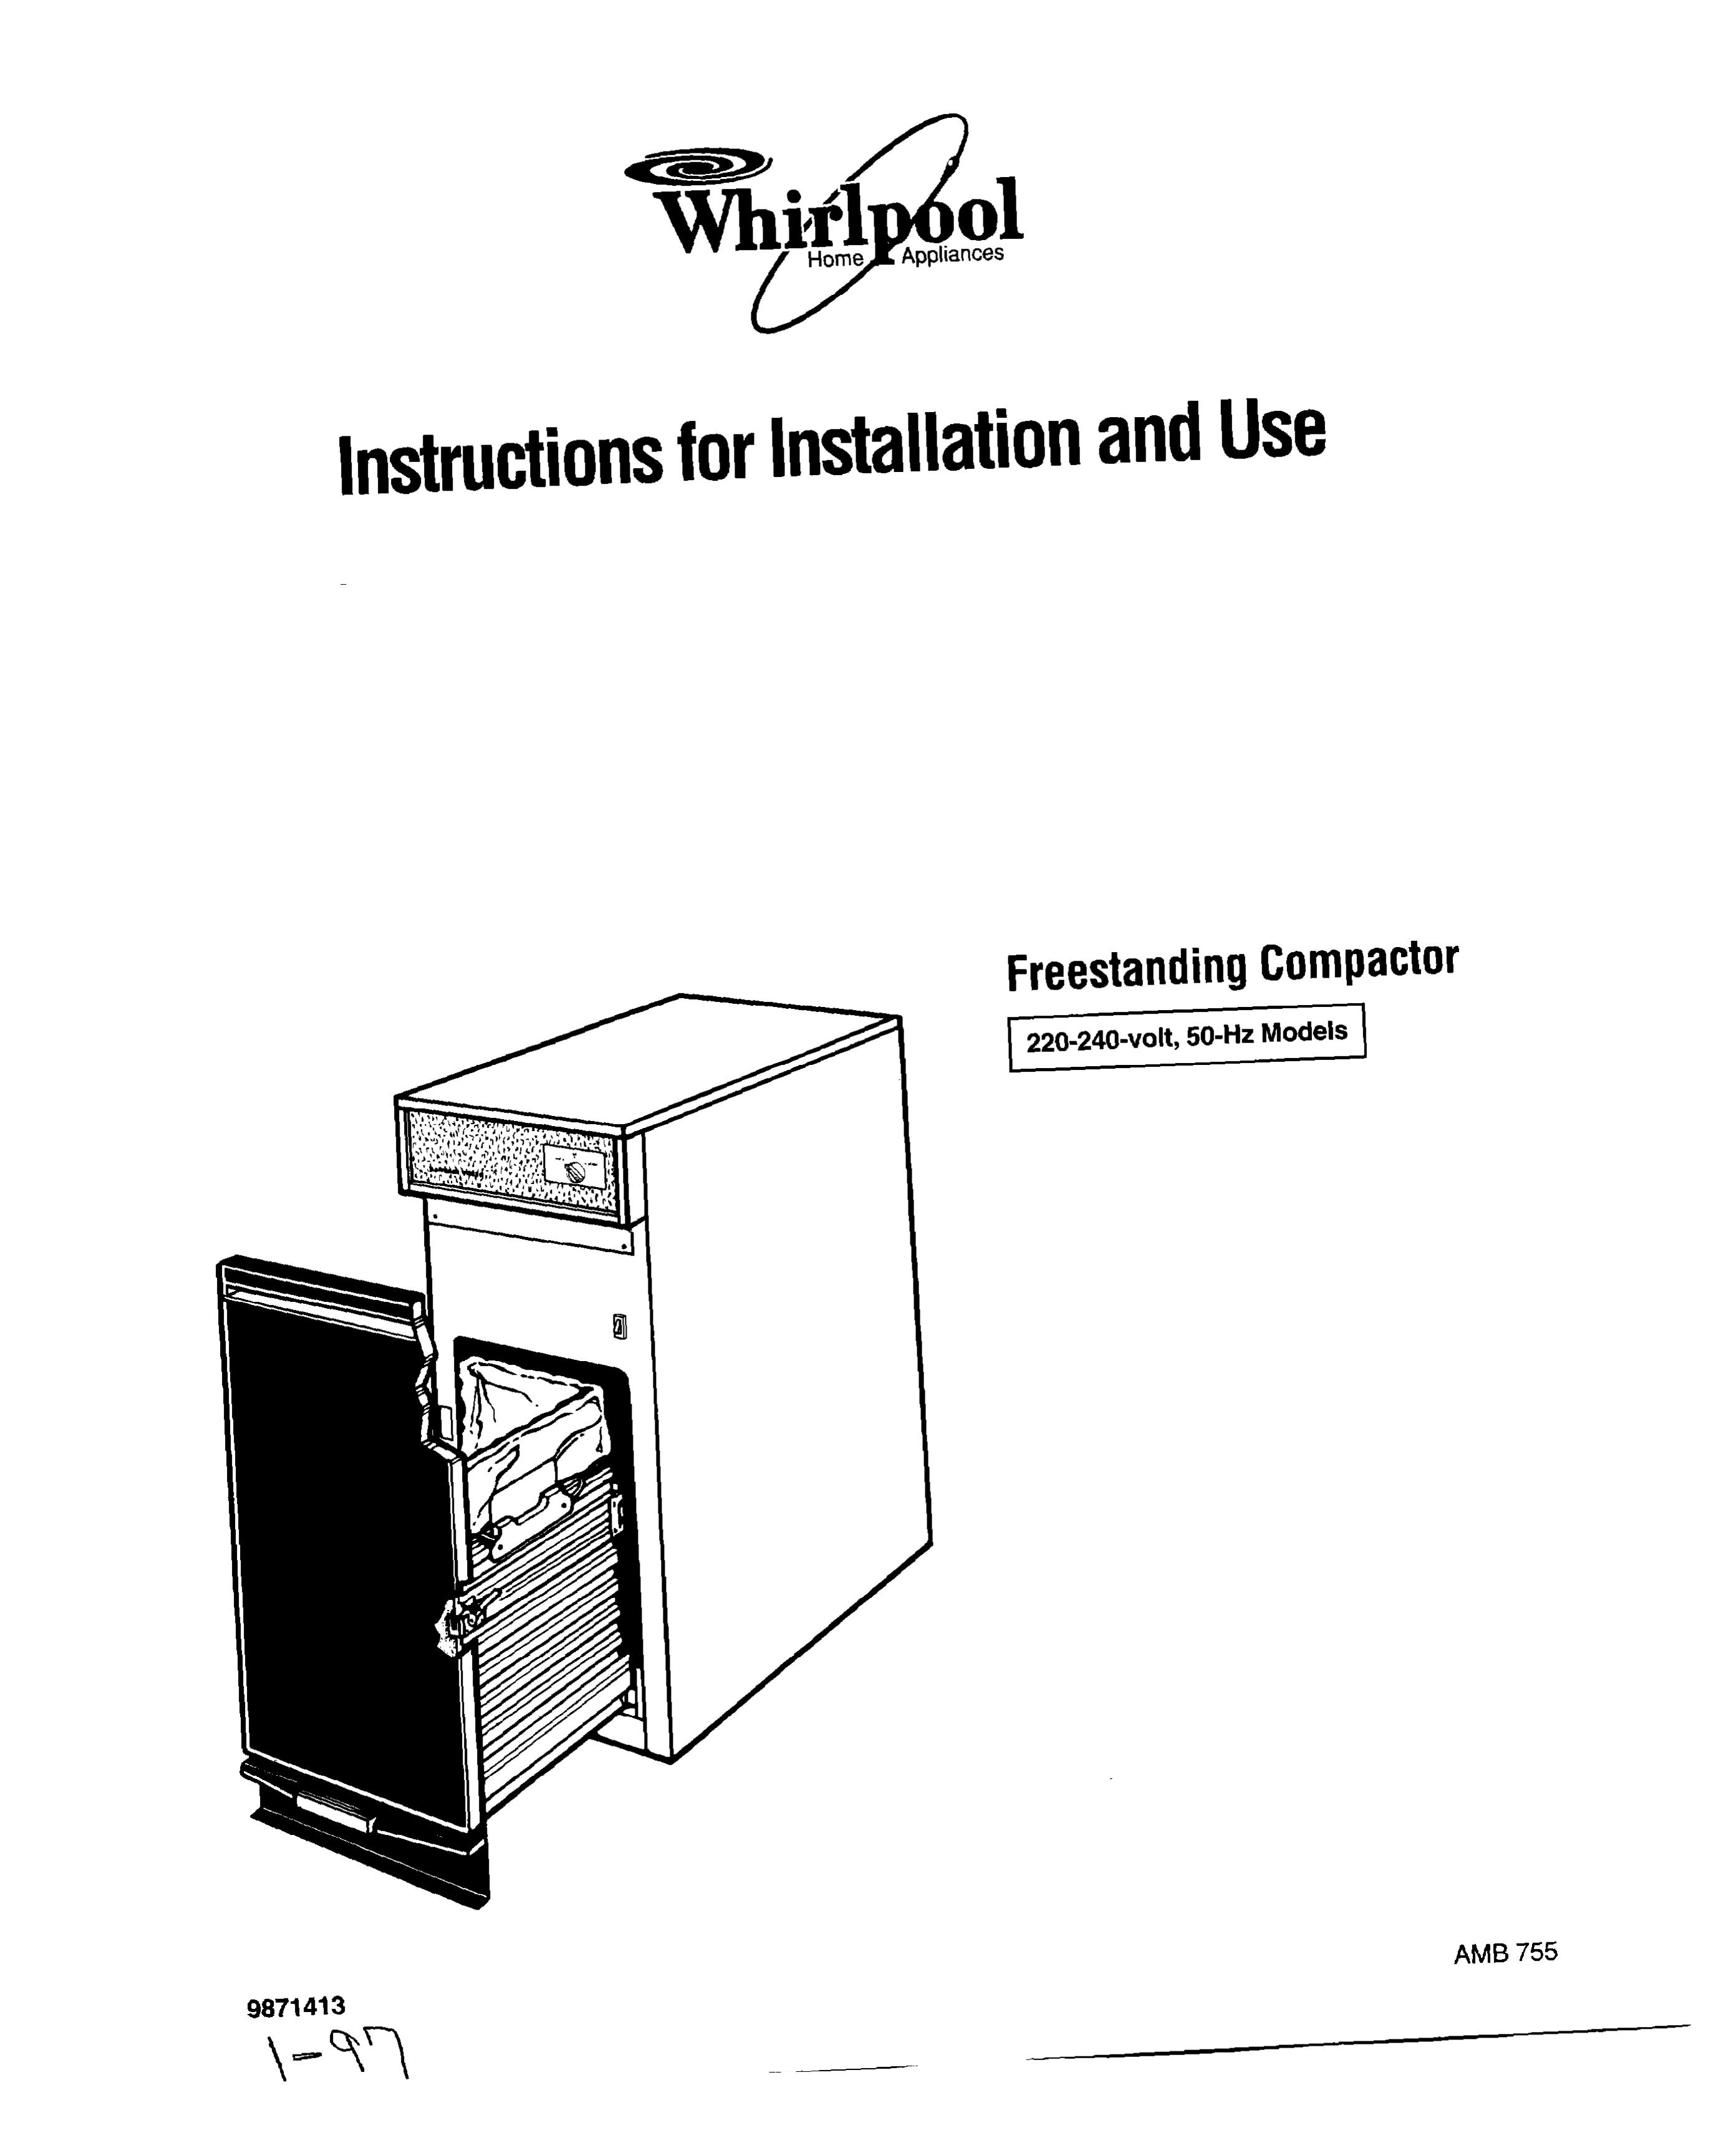 Whirlpool 50-Hz Models Trash Compactor User Manual